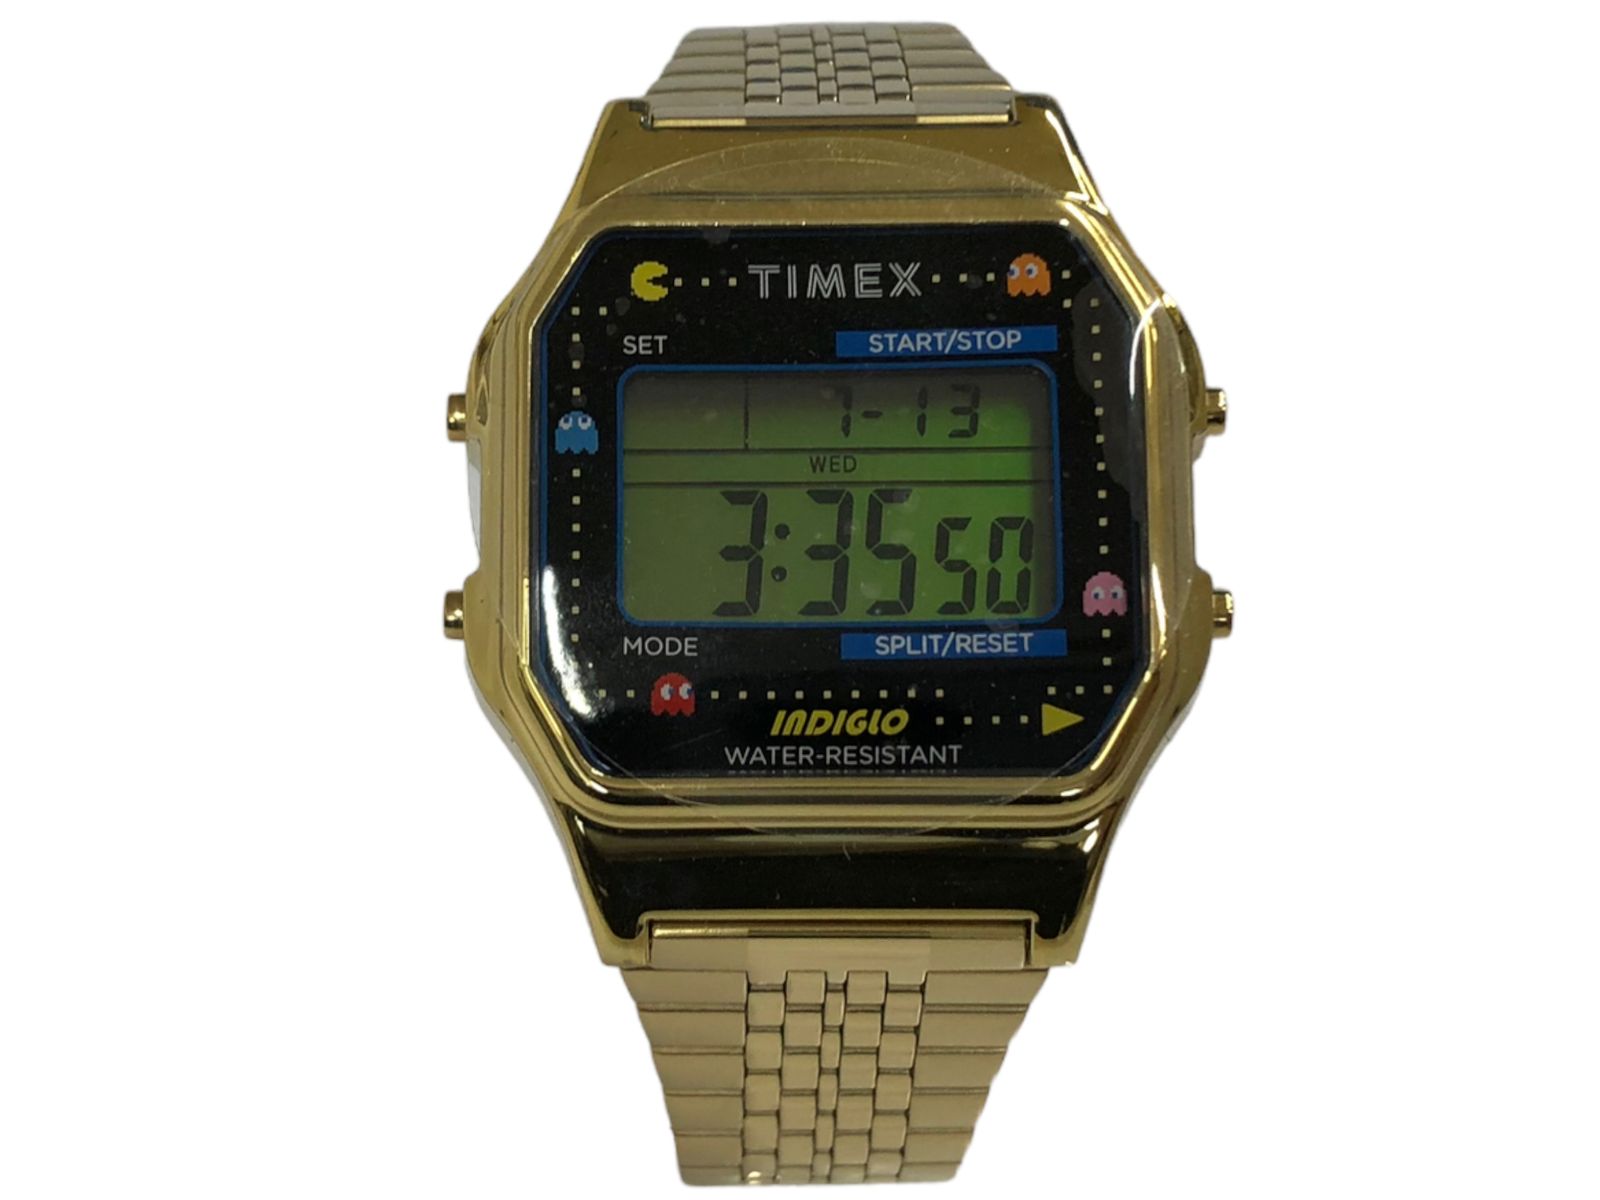 TIMEX　新品未使用品  PAC-MAN T80 デジタルゴールド